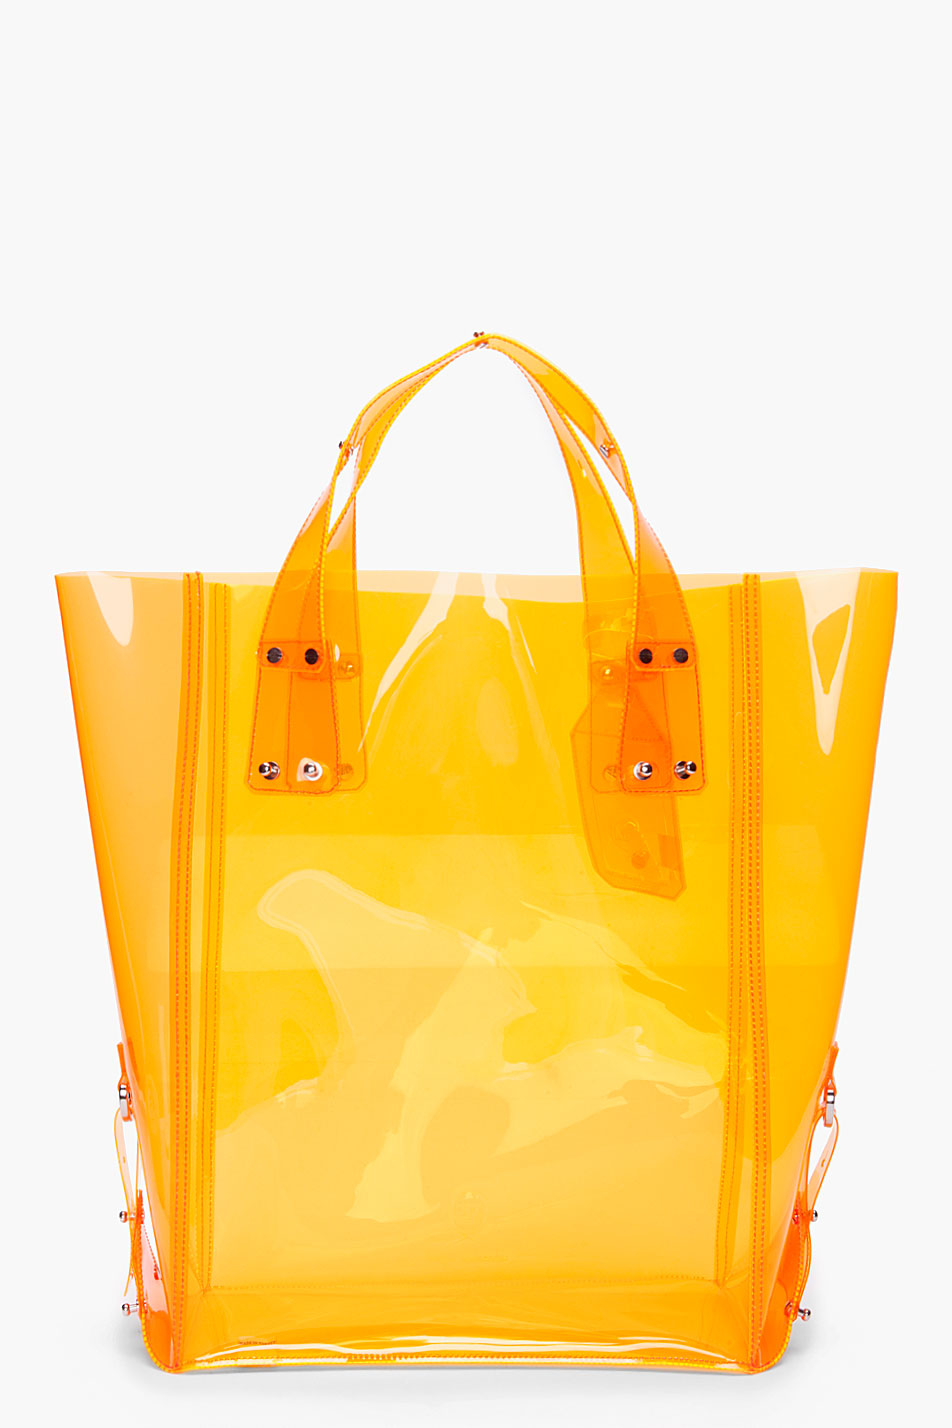 Lyst - Mcq Orange Kingsland Vinyl Shopping Tote in Yellow